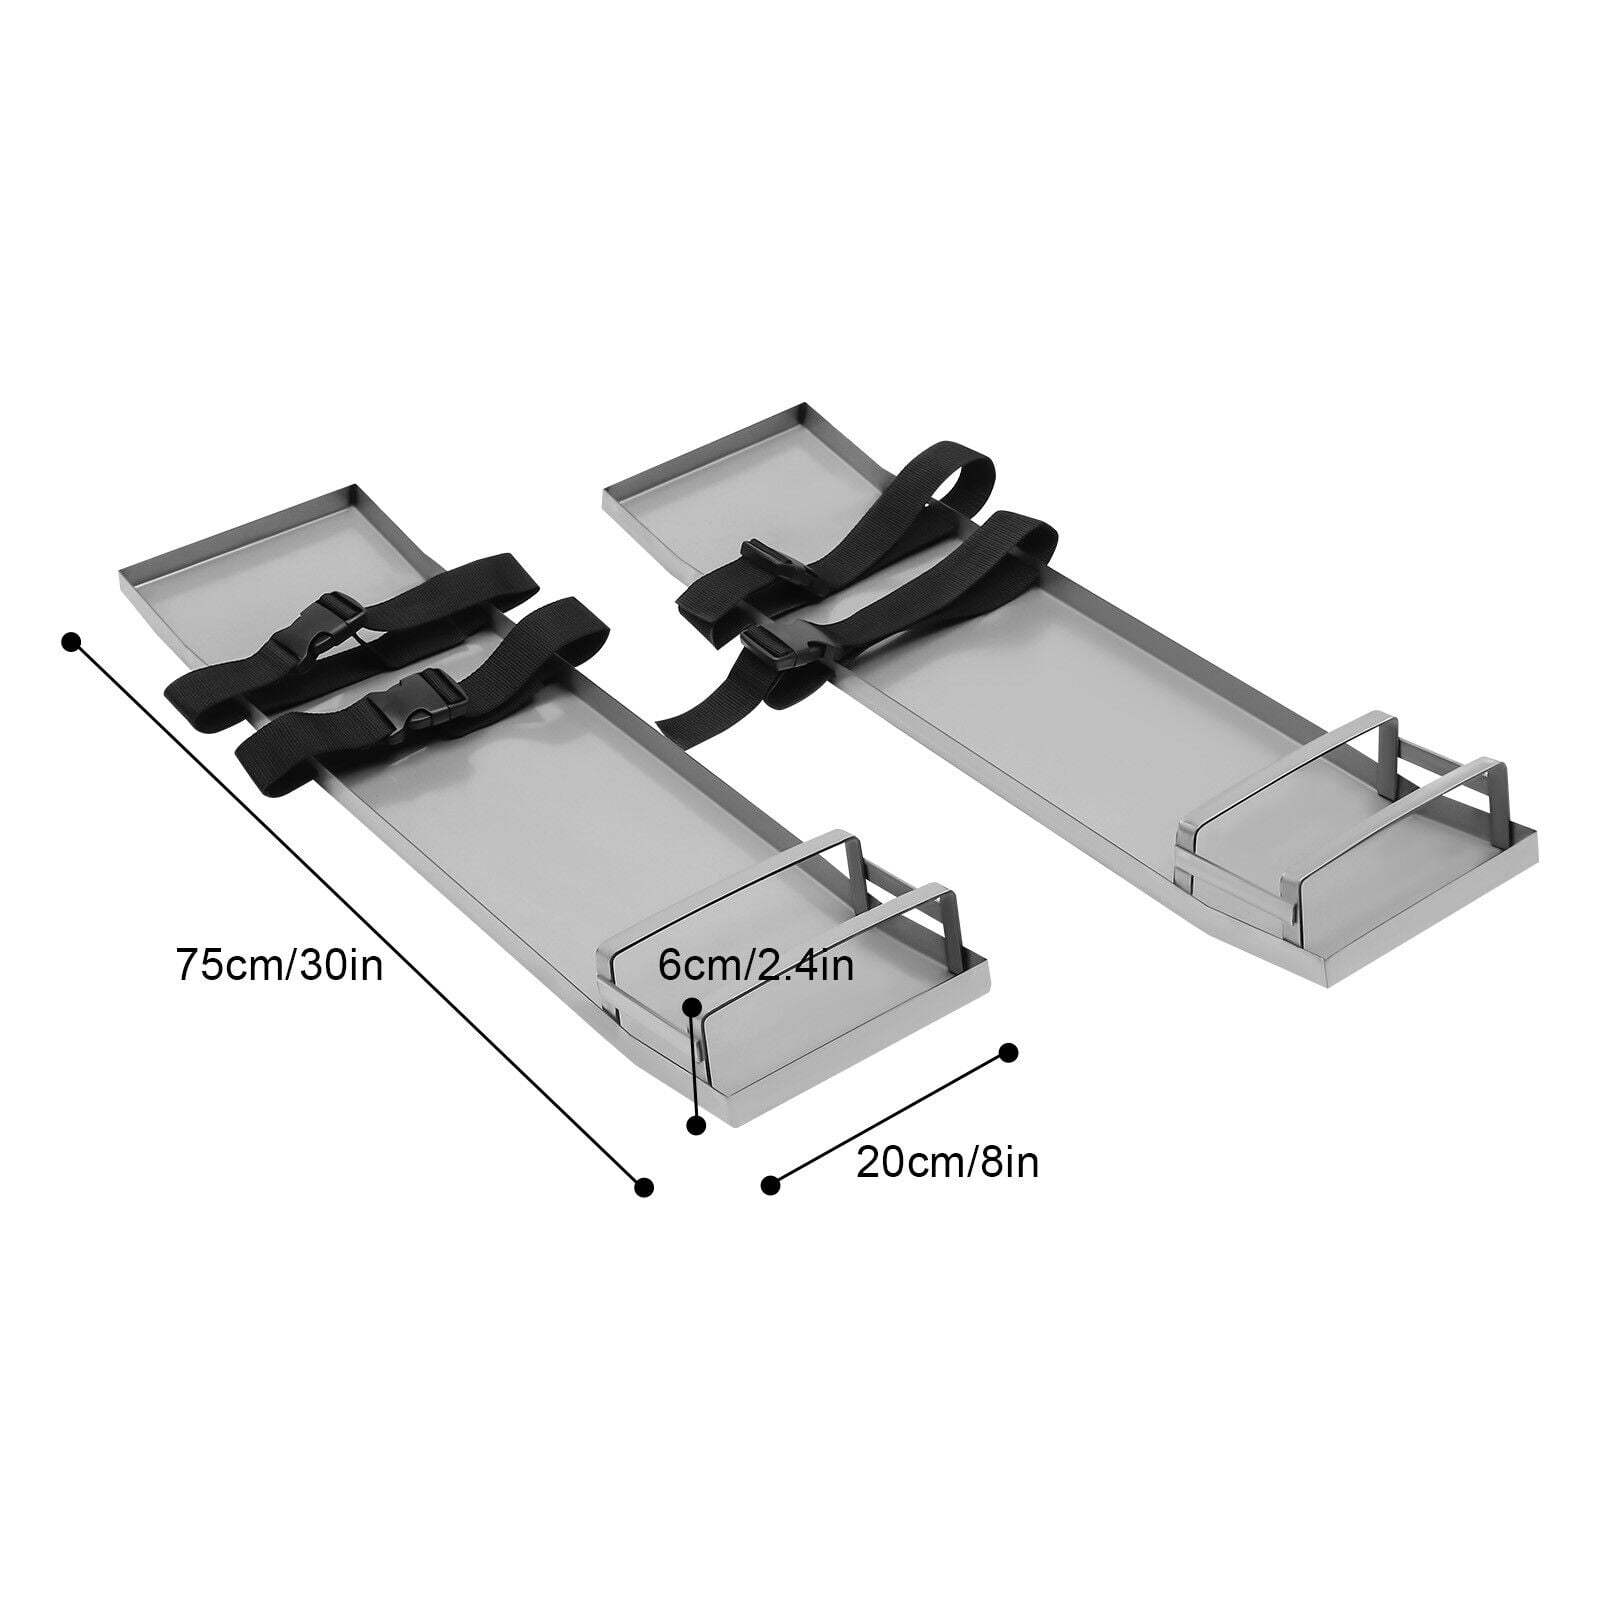 VEVOR Concrete Slider Knee Board 2 Pair Sliding Boards 28 x 8 Stainless w/ Pad